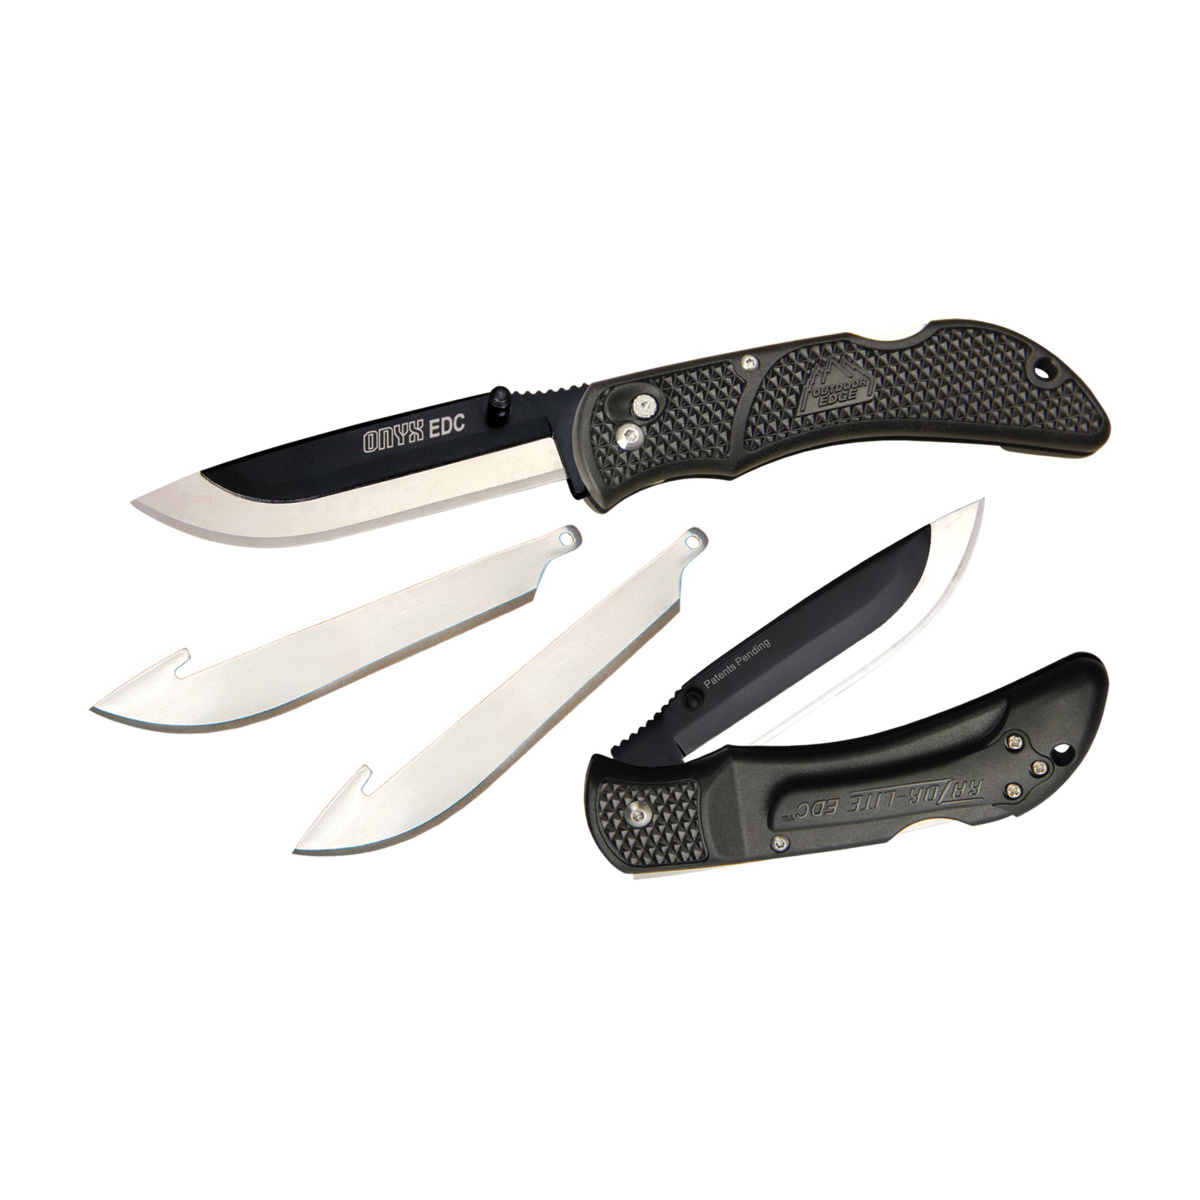 Outdoor Edge OX-10C Knife, 3-1/2 in L Blade, 3Blade, Black Handle - 1